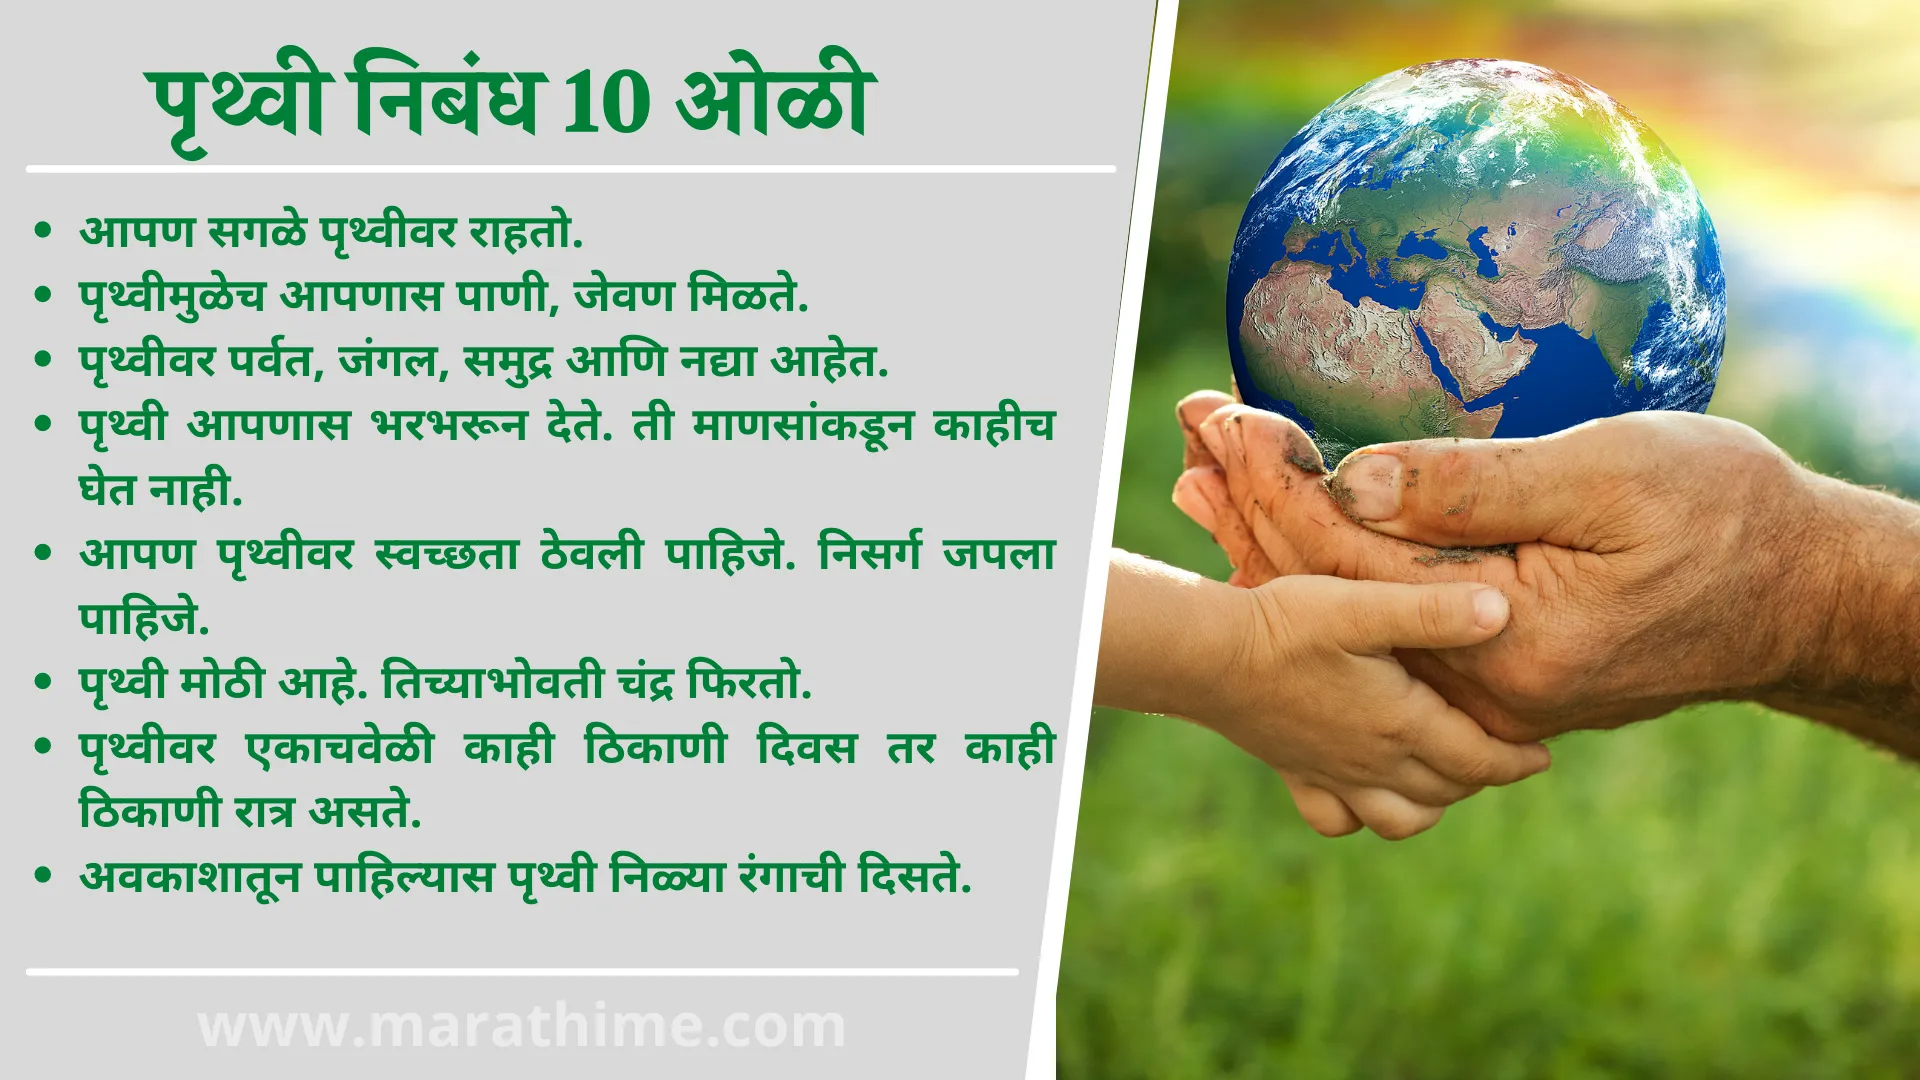 पृथ्वी निबंध 10 ओळी, 10 Lines On Earth in Marathi